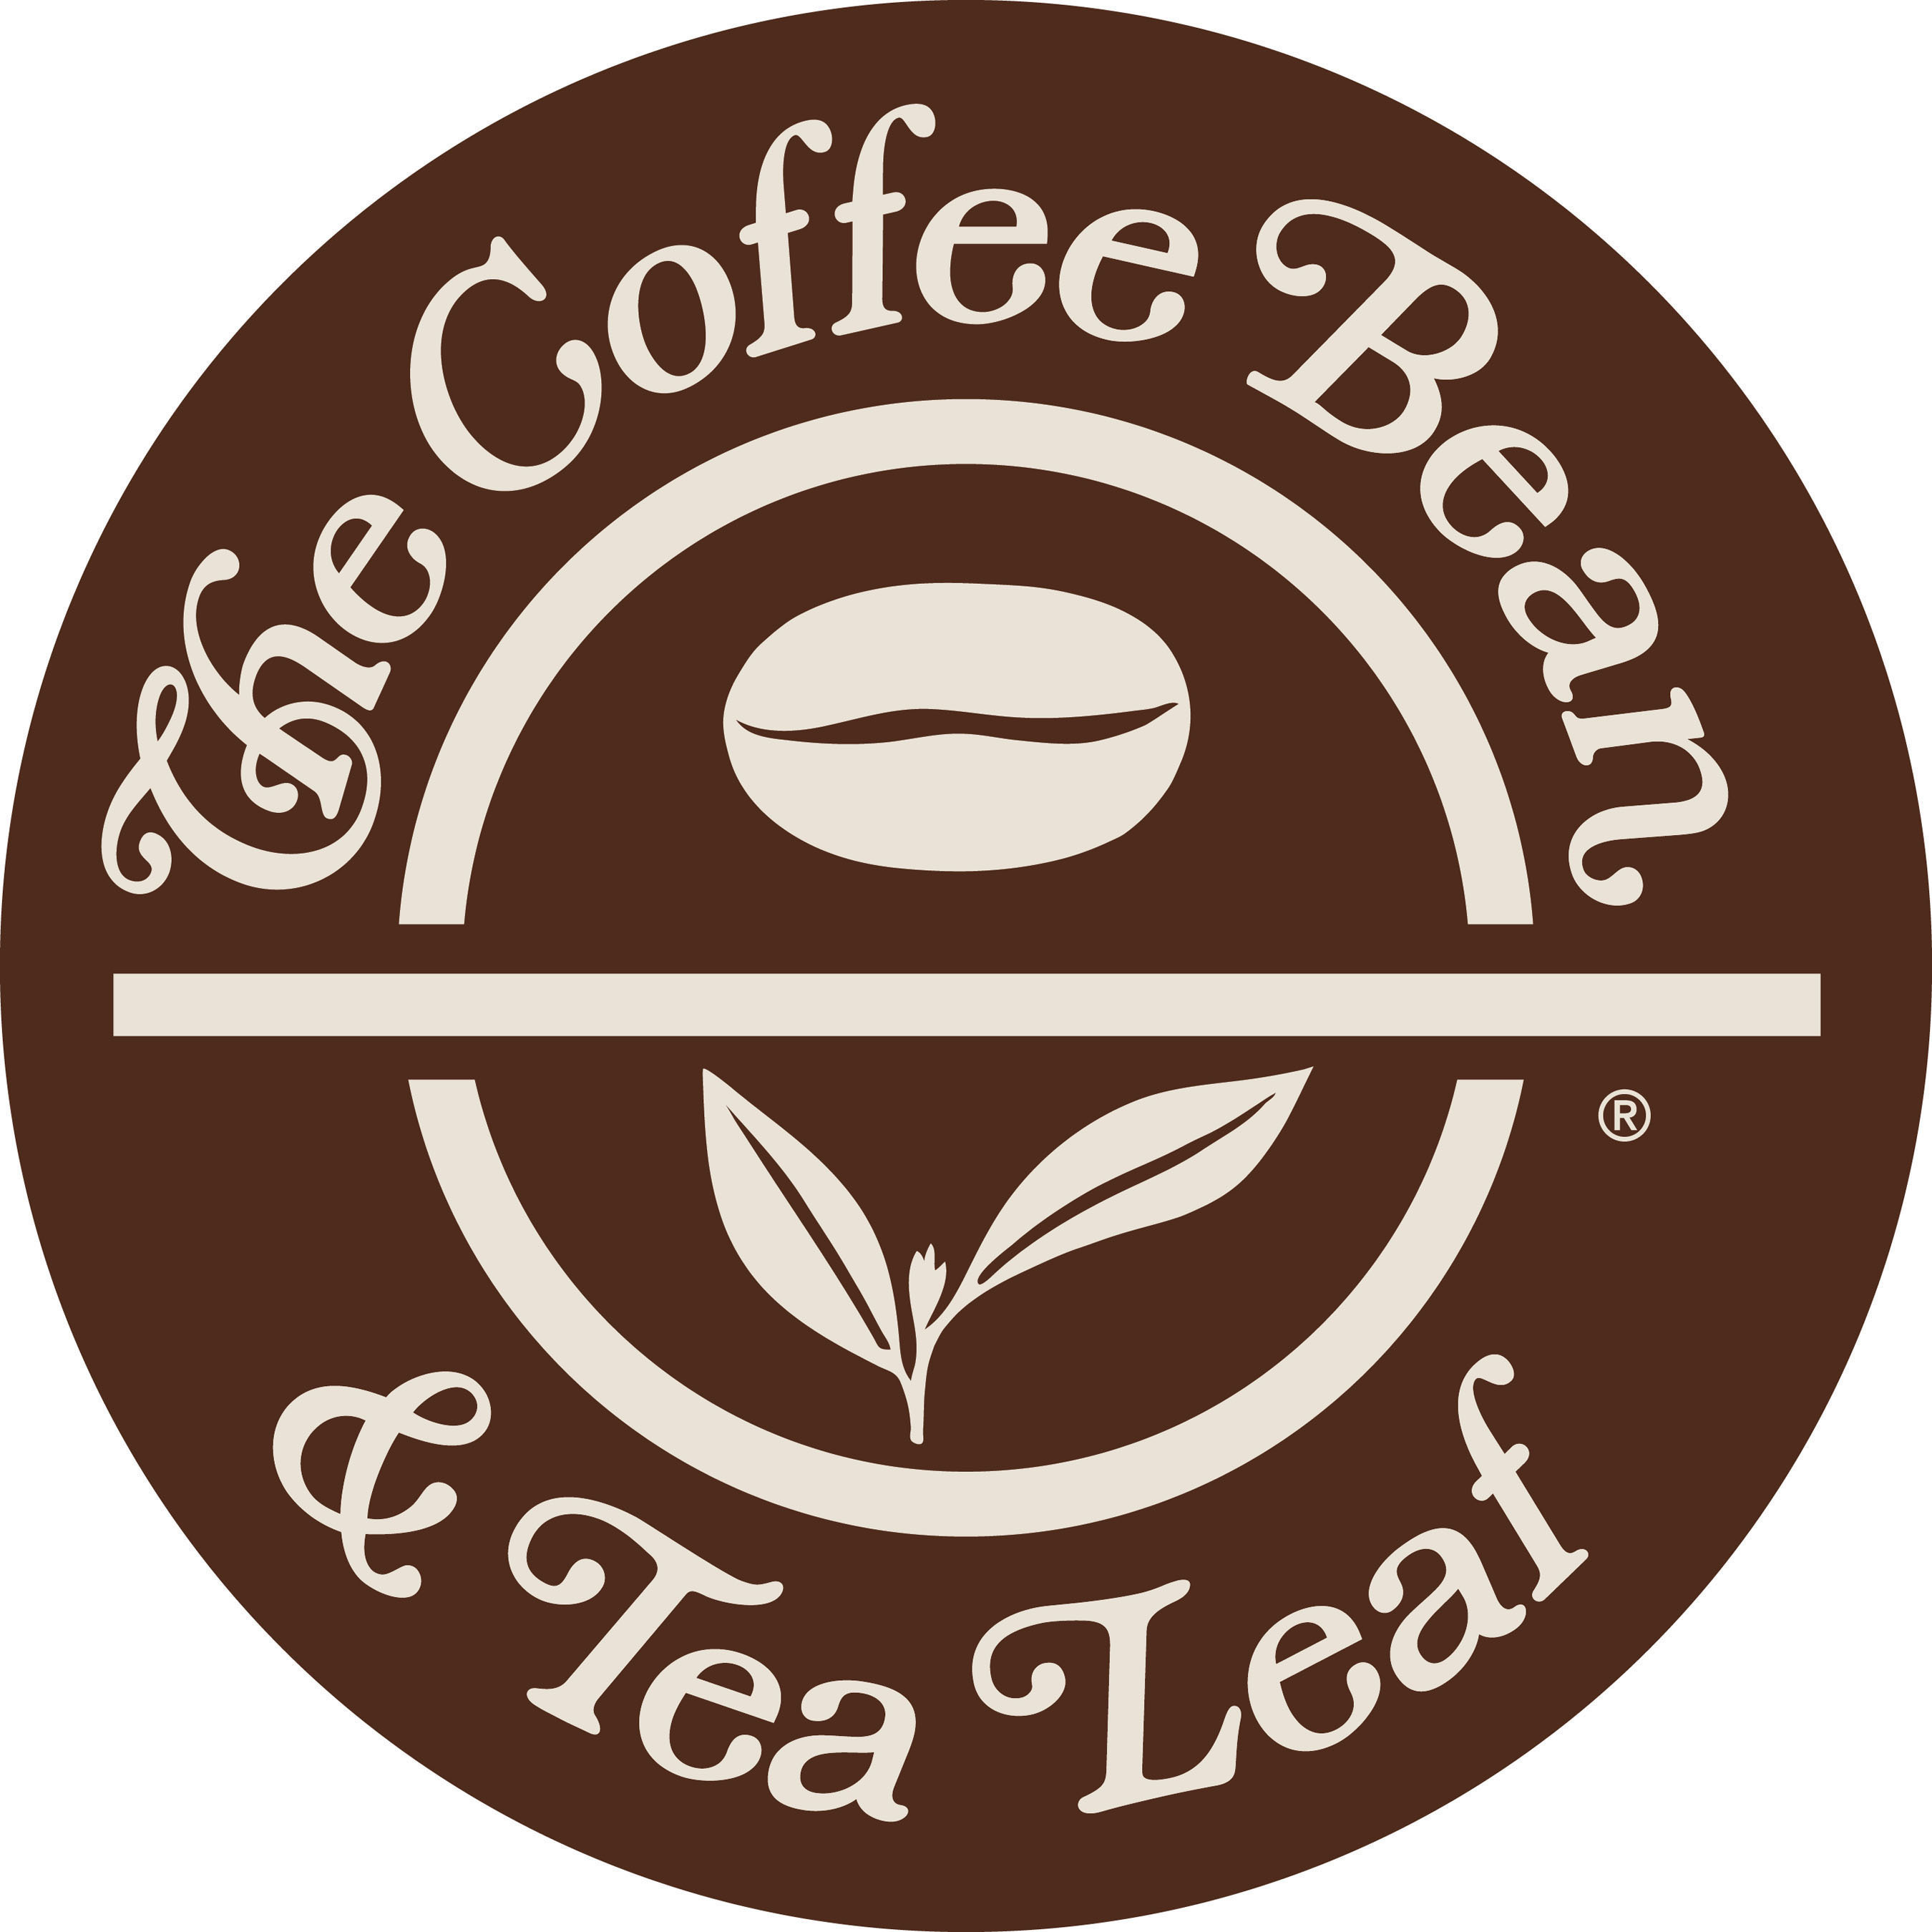 The Coffee Bean & Tea Leaf Logo. (PRNewsFoto/The Coffee Bean & Tea Leaf) (PRNewsFoto/)